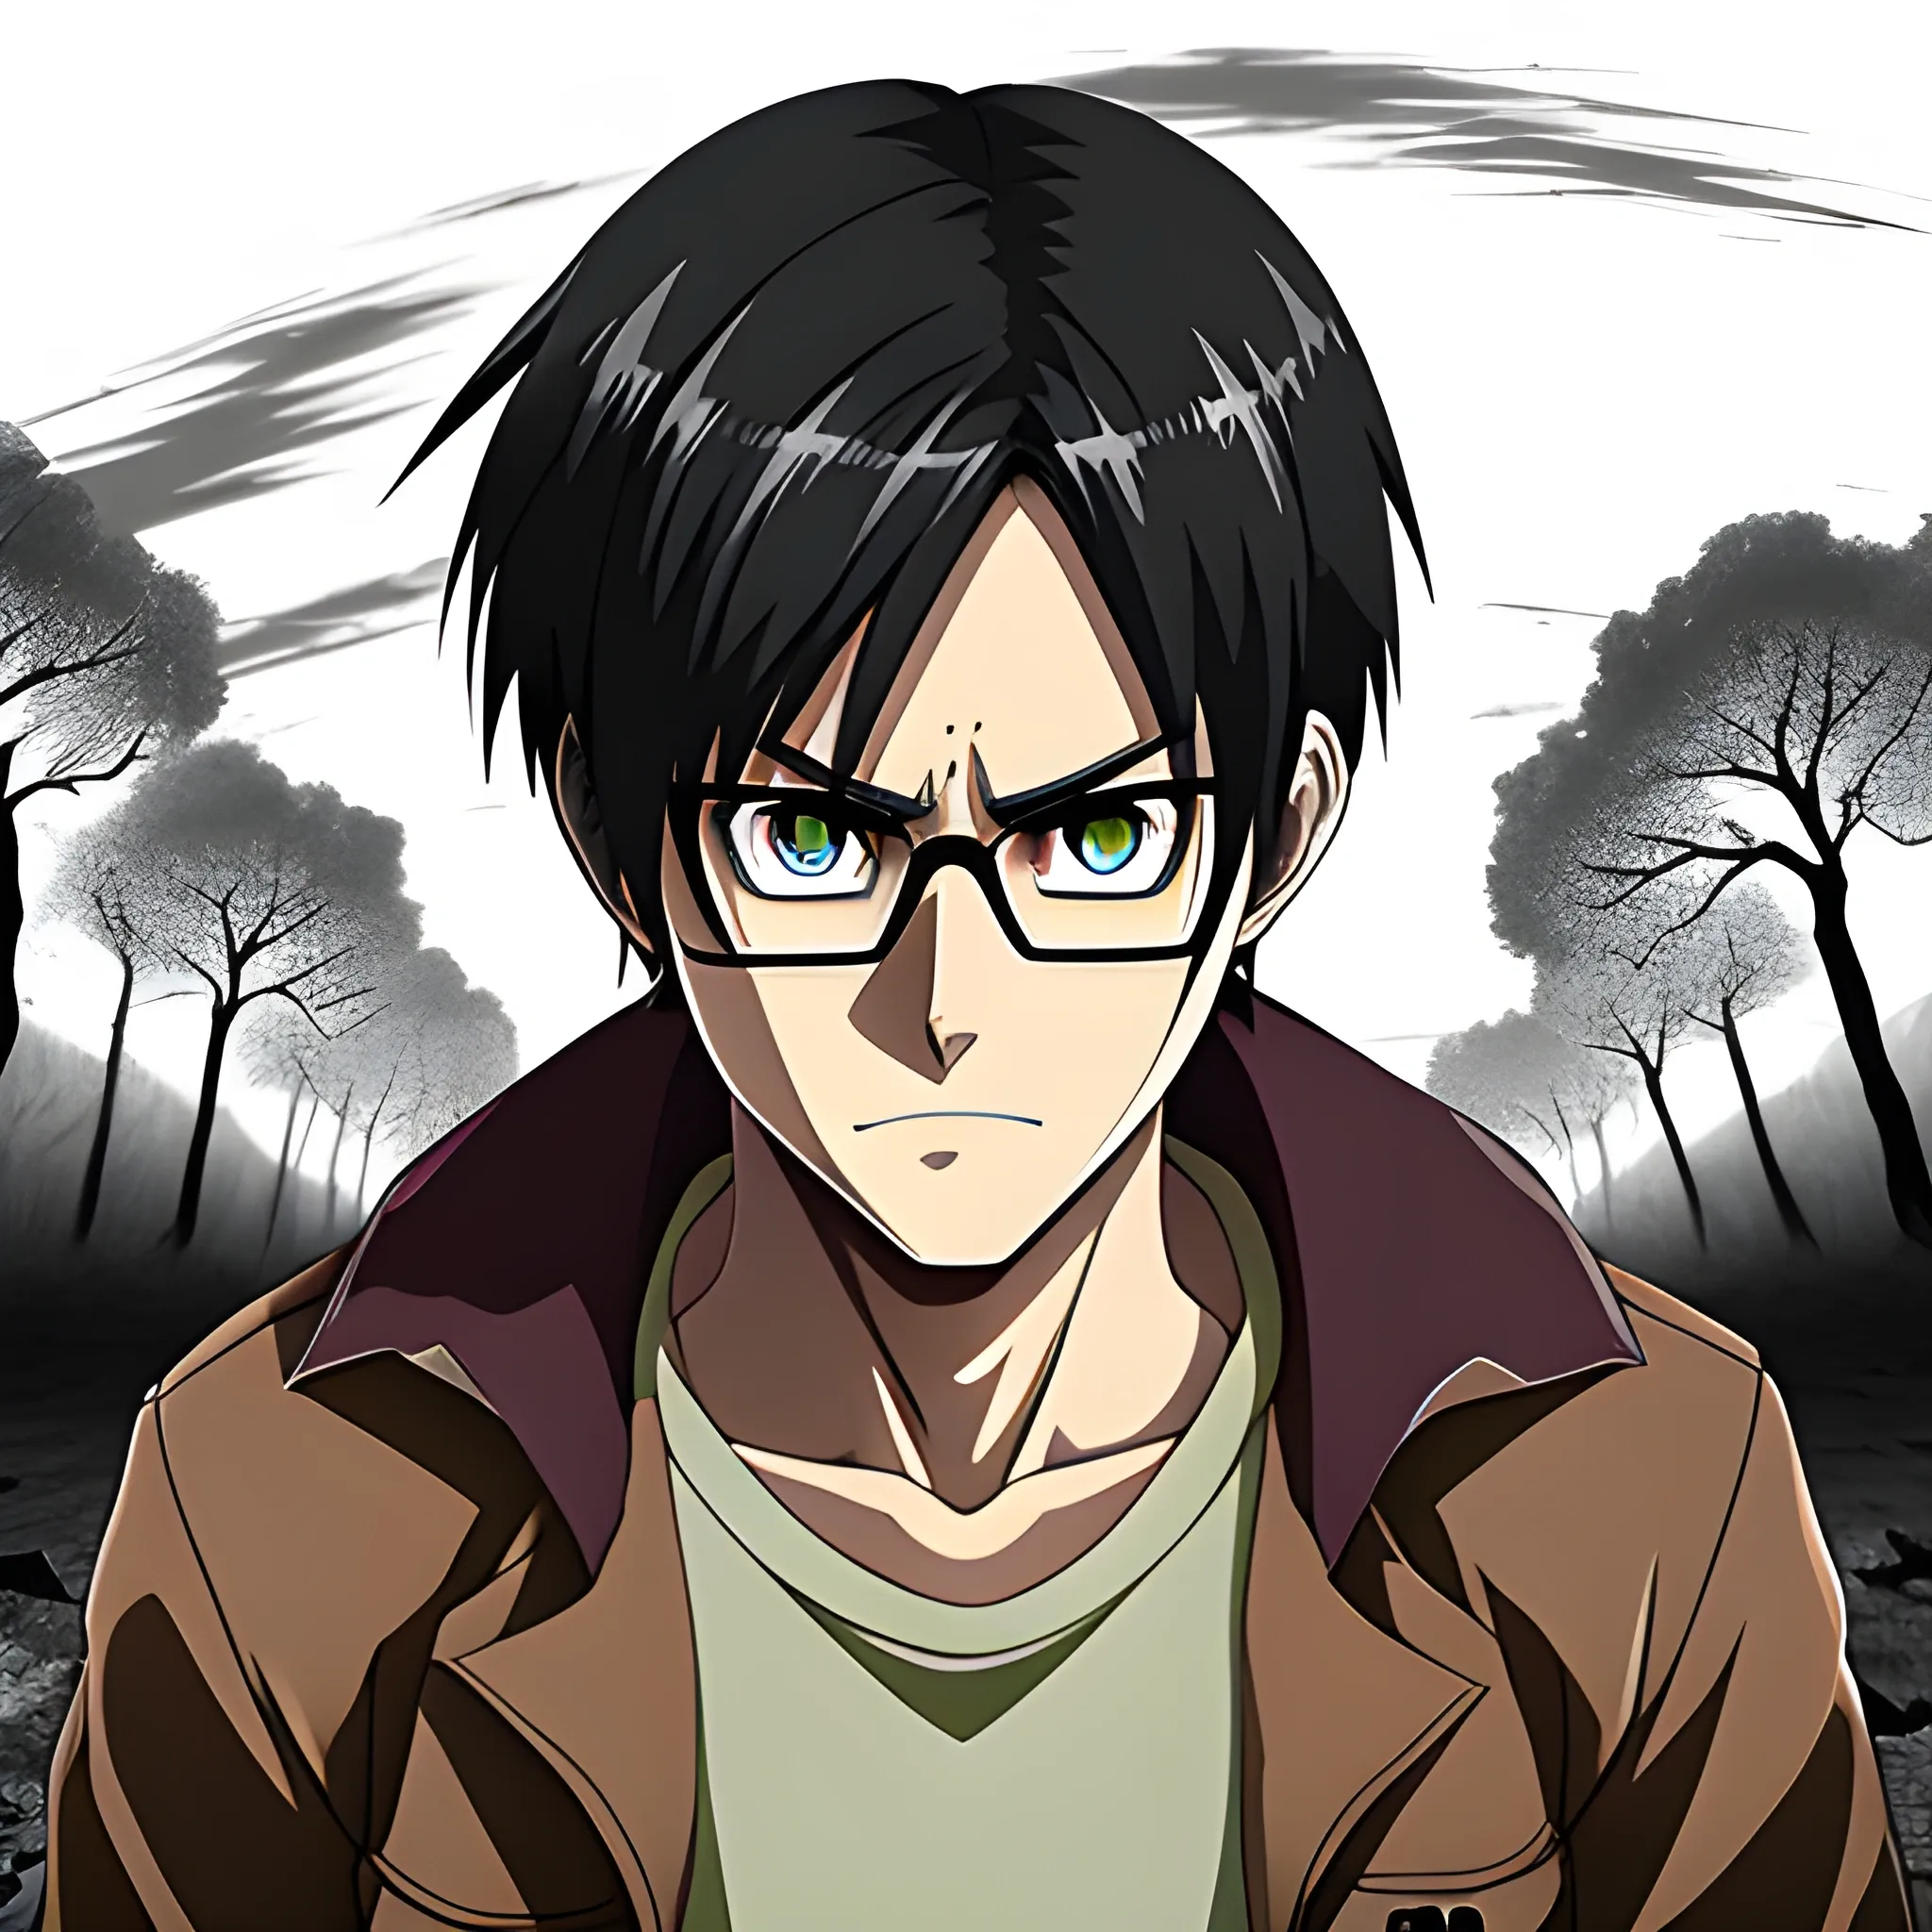 Anime man attack on titan, eren, purple eyes, glasses black, forest background, hyper deformed, 4k.